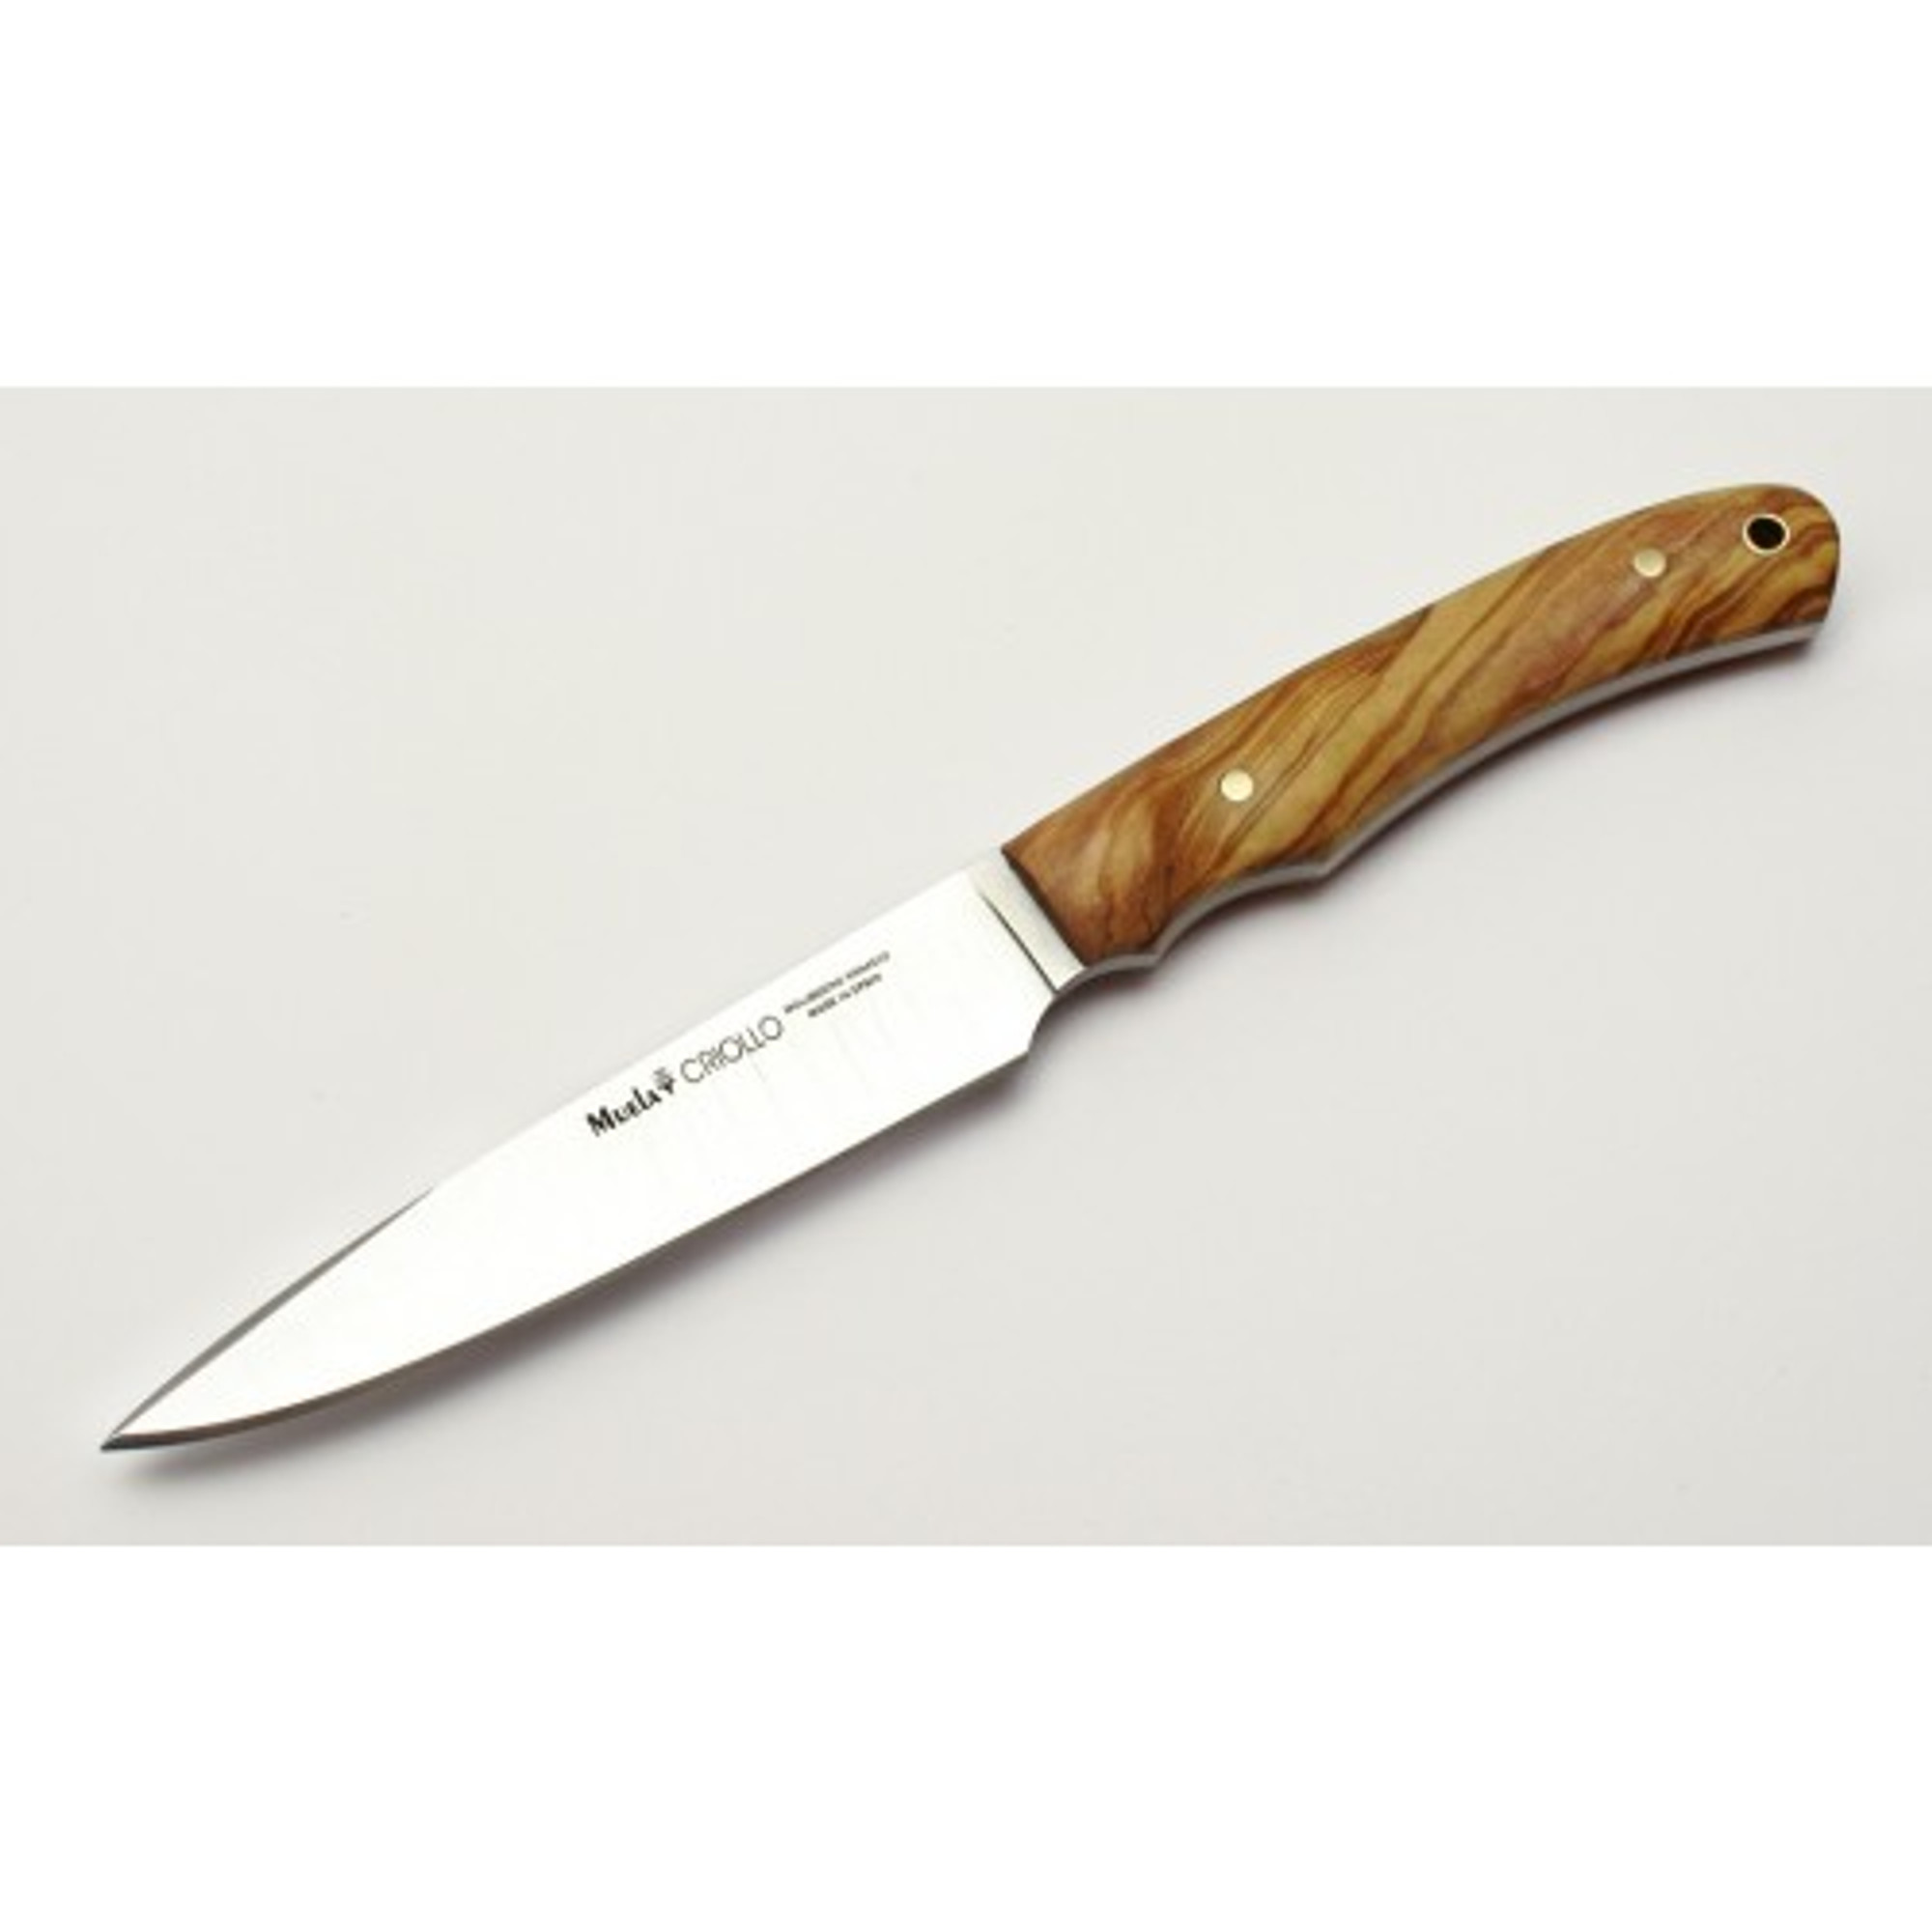 MUELA CRIOLLO-14OL, X50CrMoV15, 5-5/16" Fixed Blade Hunting Knife, Olivewood Handle